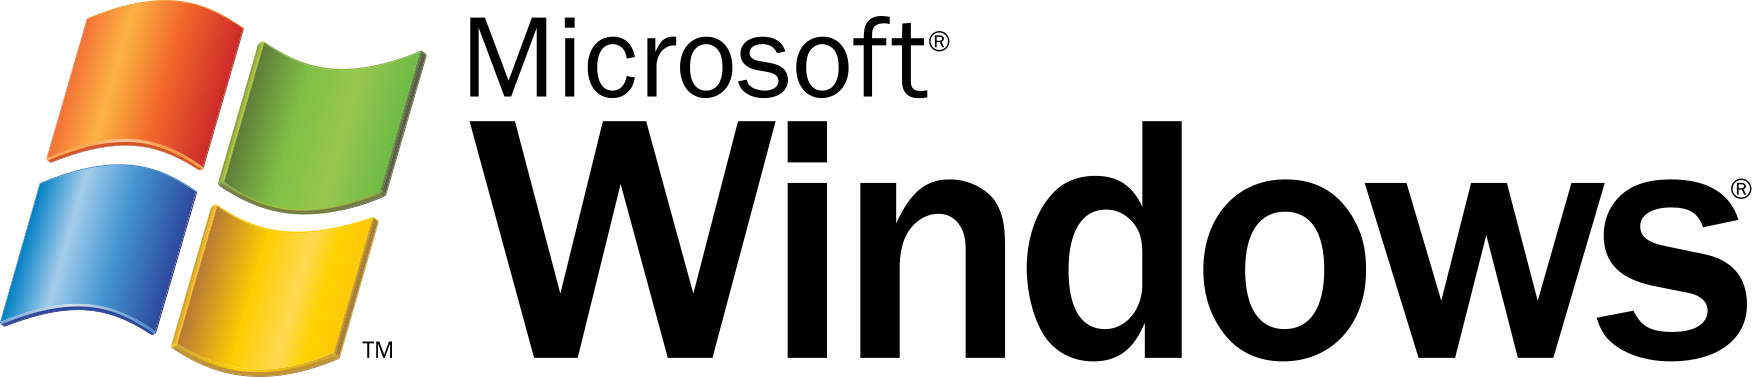 Windows 7 svg #4, Download drawings